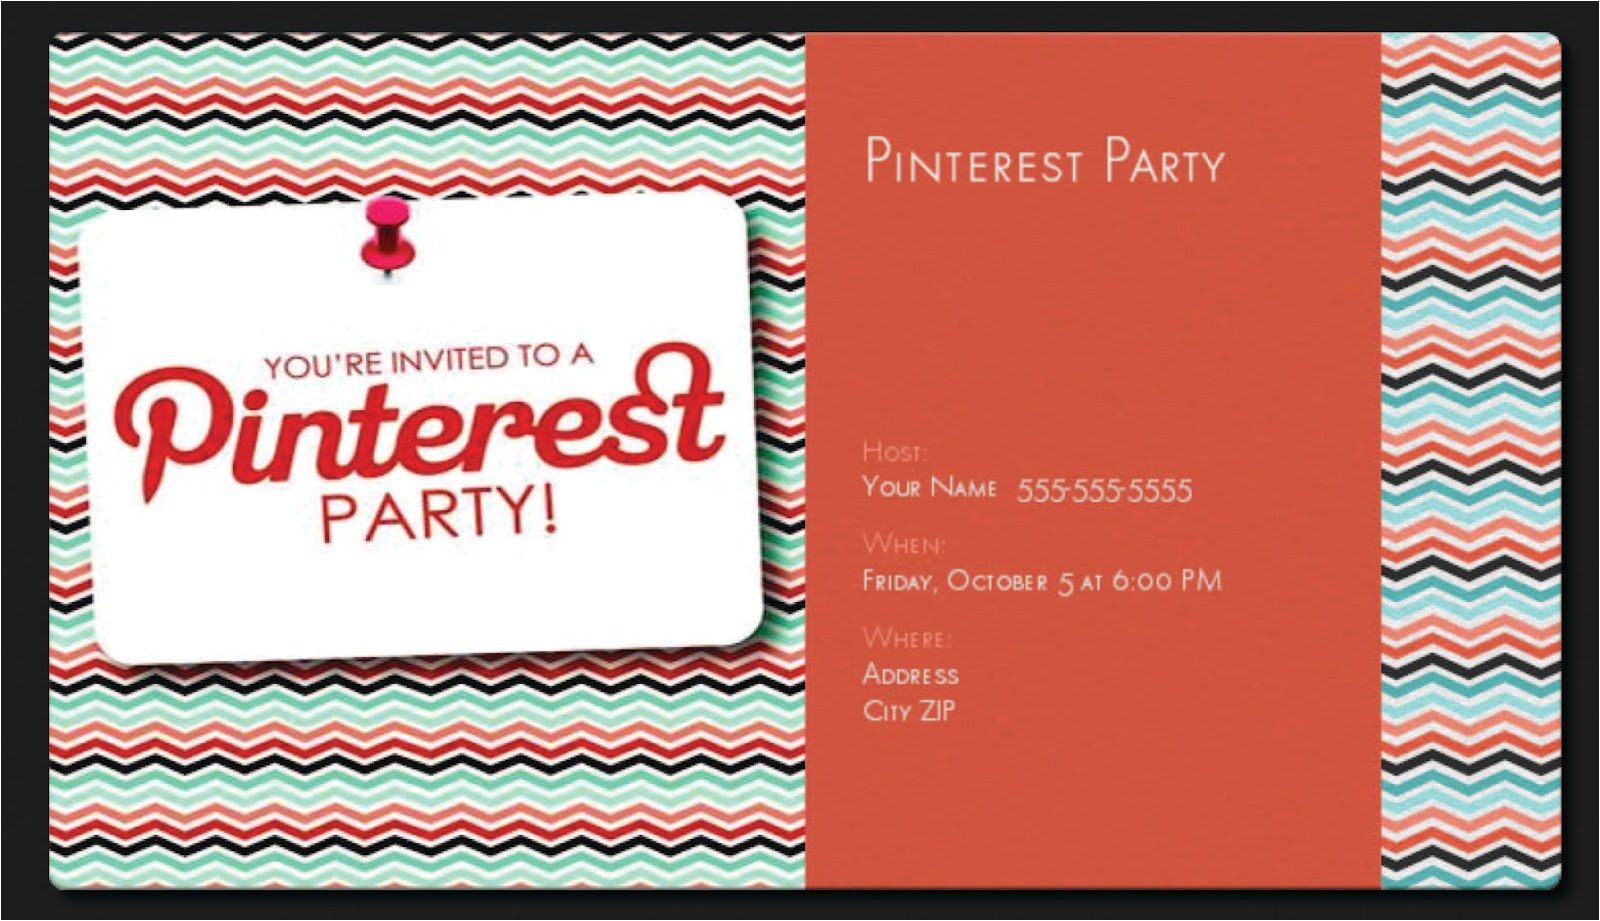 pinterest party evite template